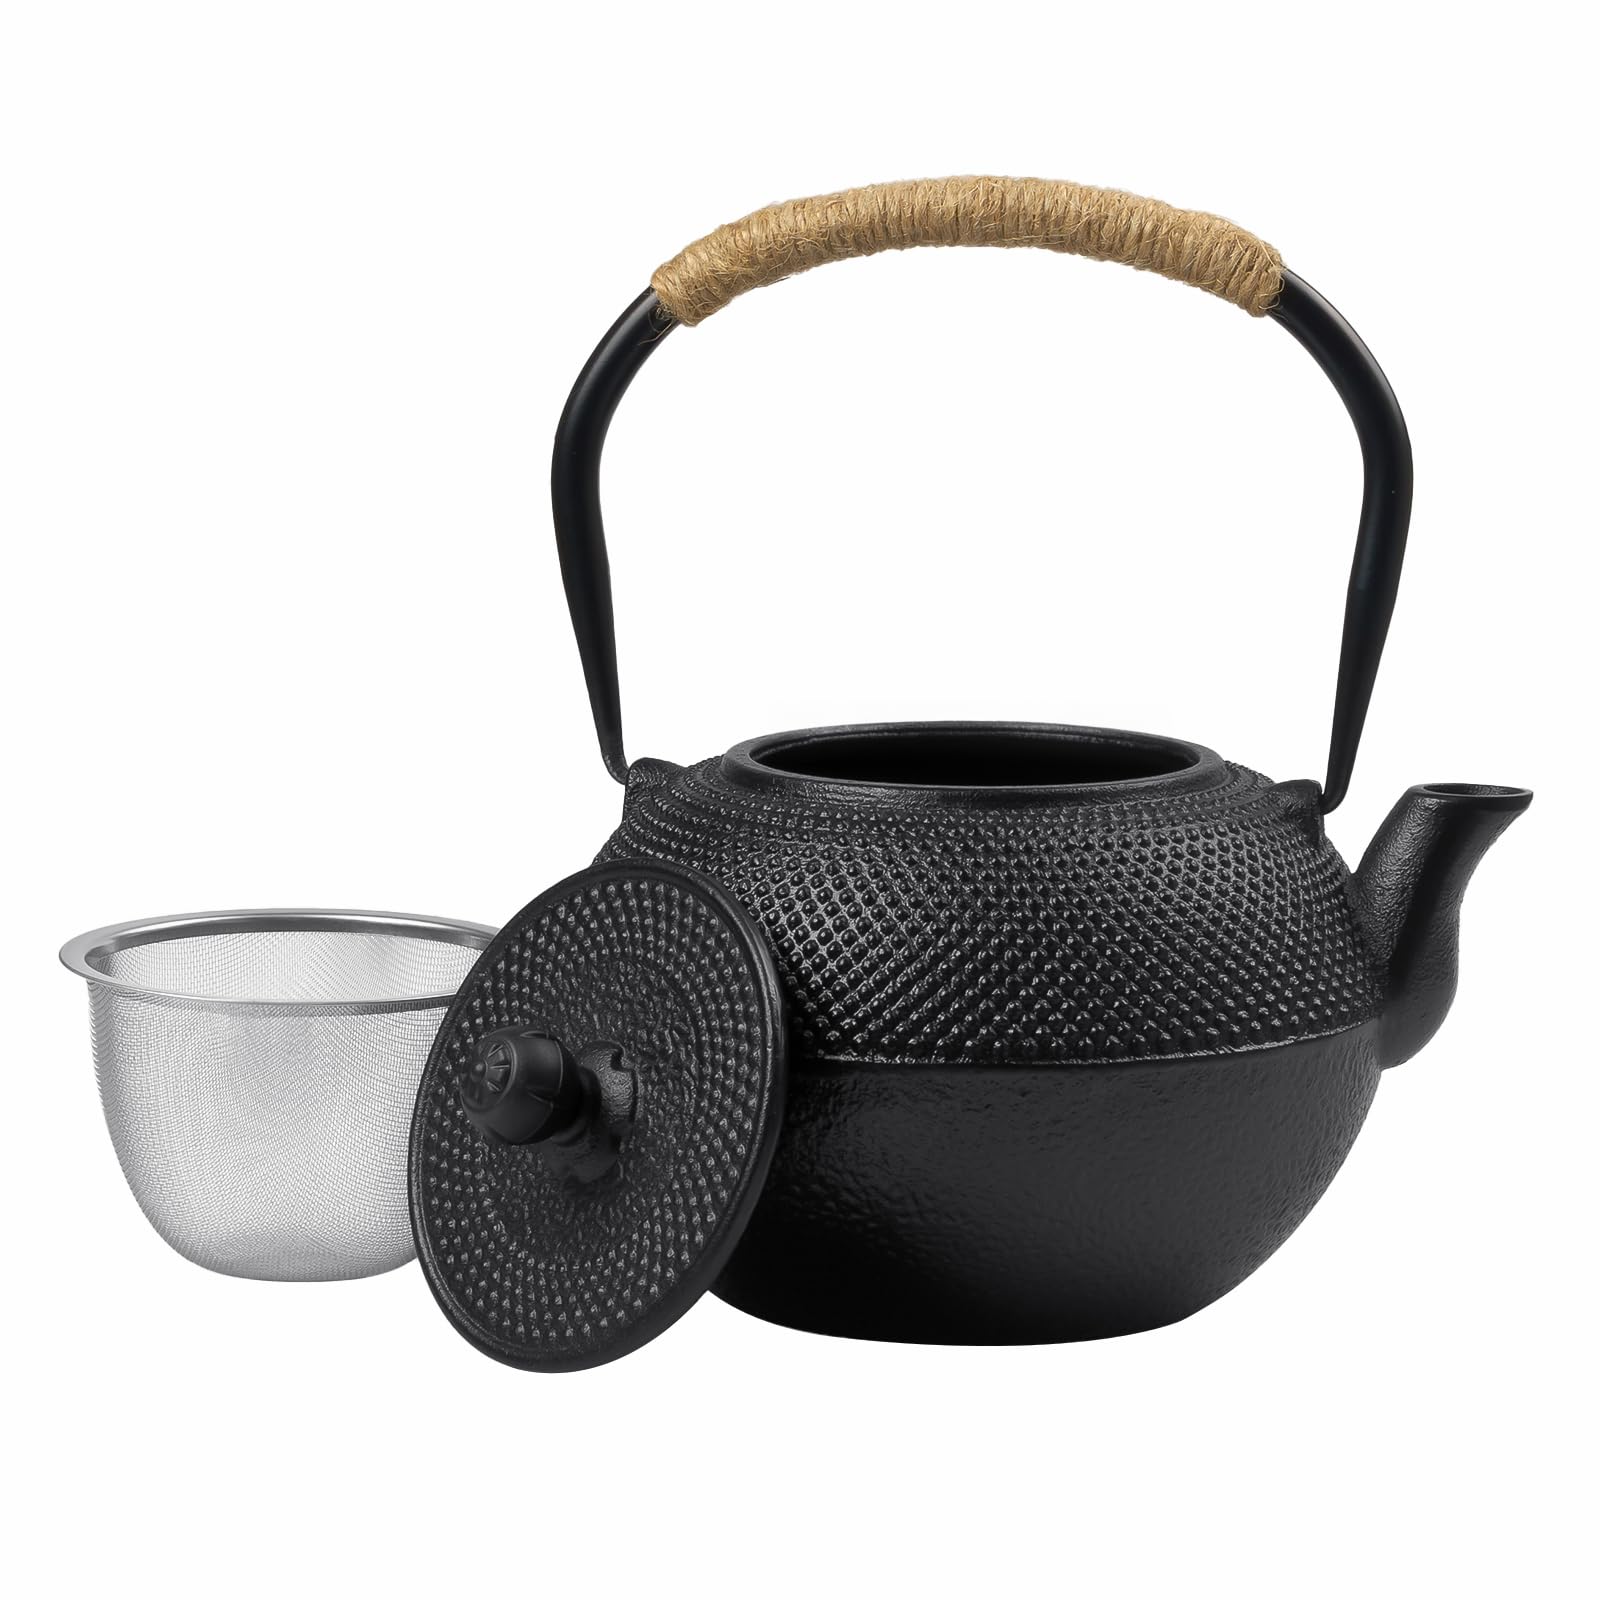  iron kettle iron vessel south part iron vessel small teapot ...* kettle ih direct fire correspondence iron bin iron. small teapot ... tea .. attaching stylish iron .. teapot tradition handicraft present 